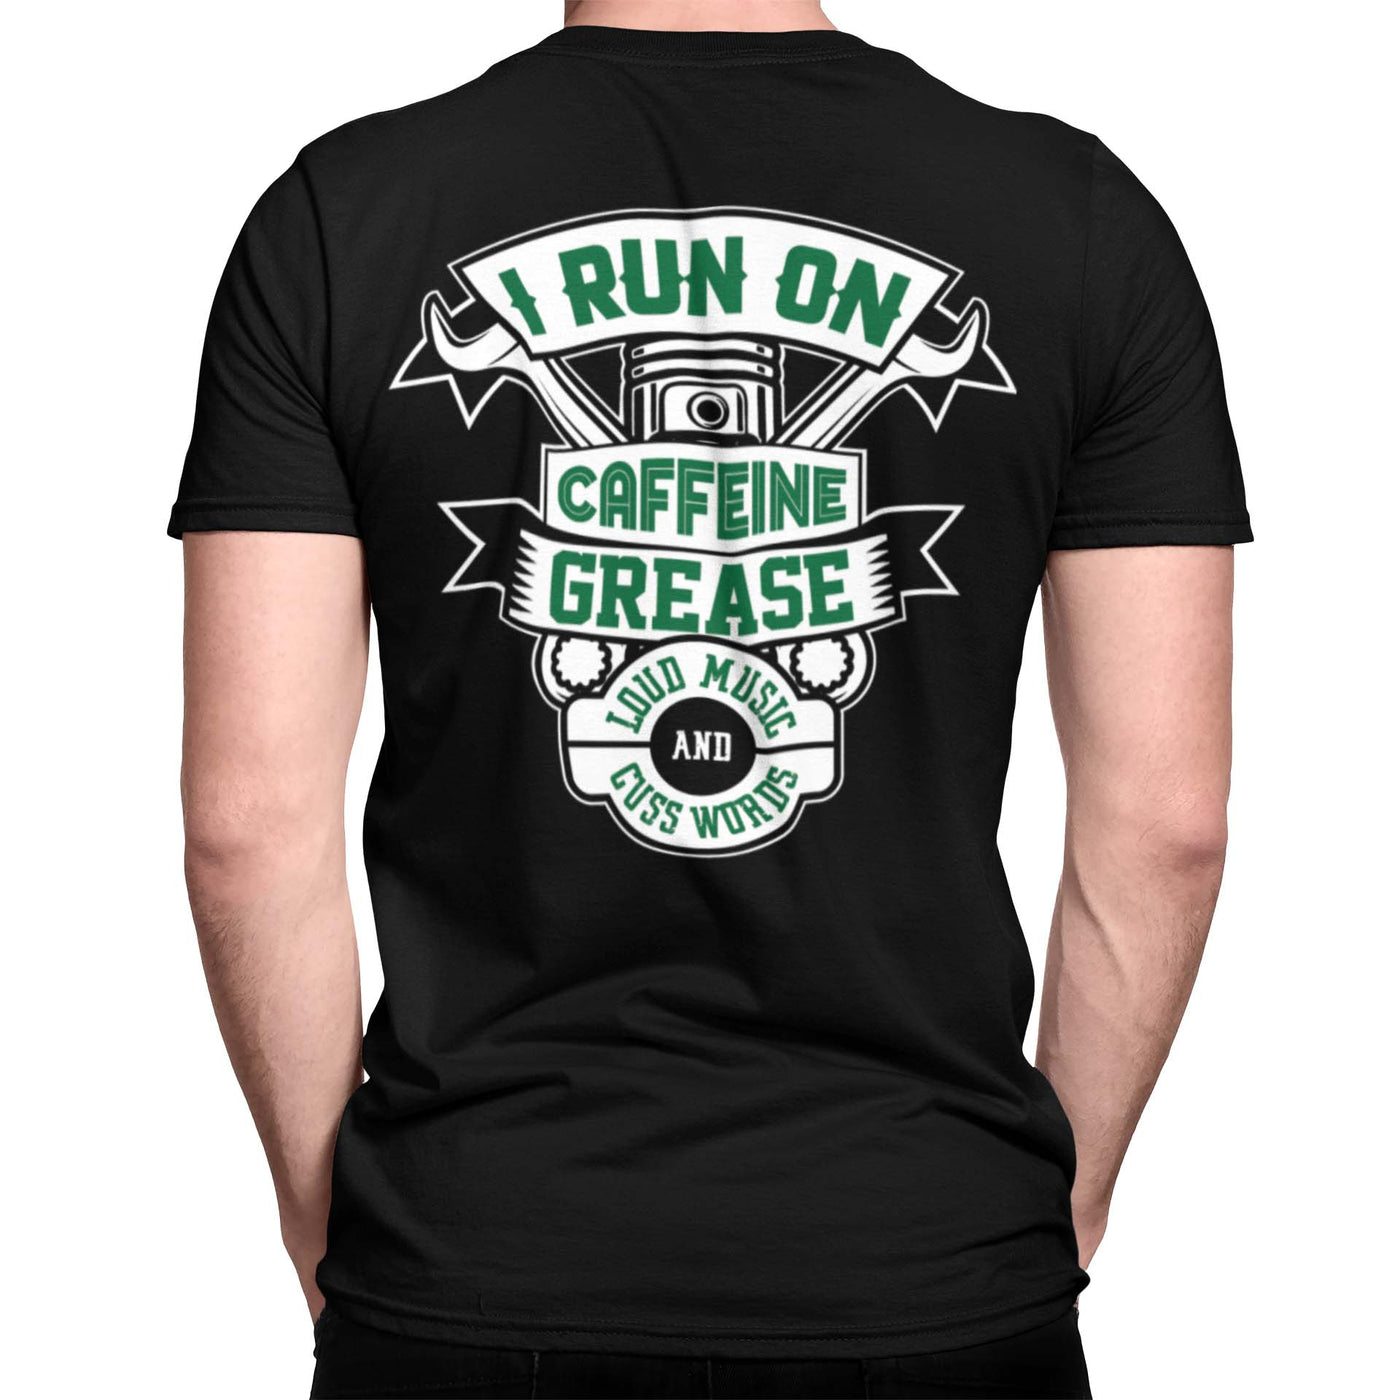 I RUN ON CAFFEINE GREASE LOUD MUSIC T-shirt